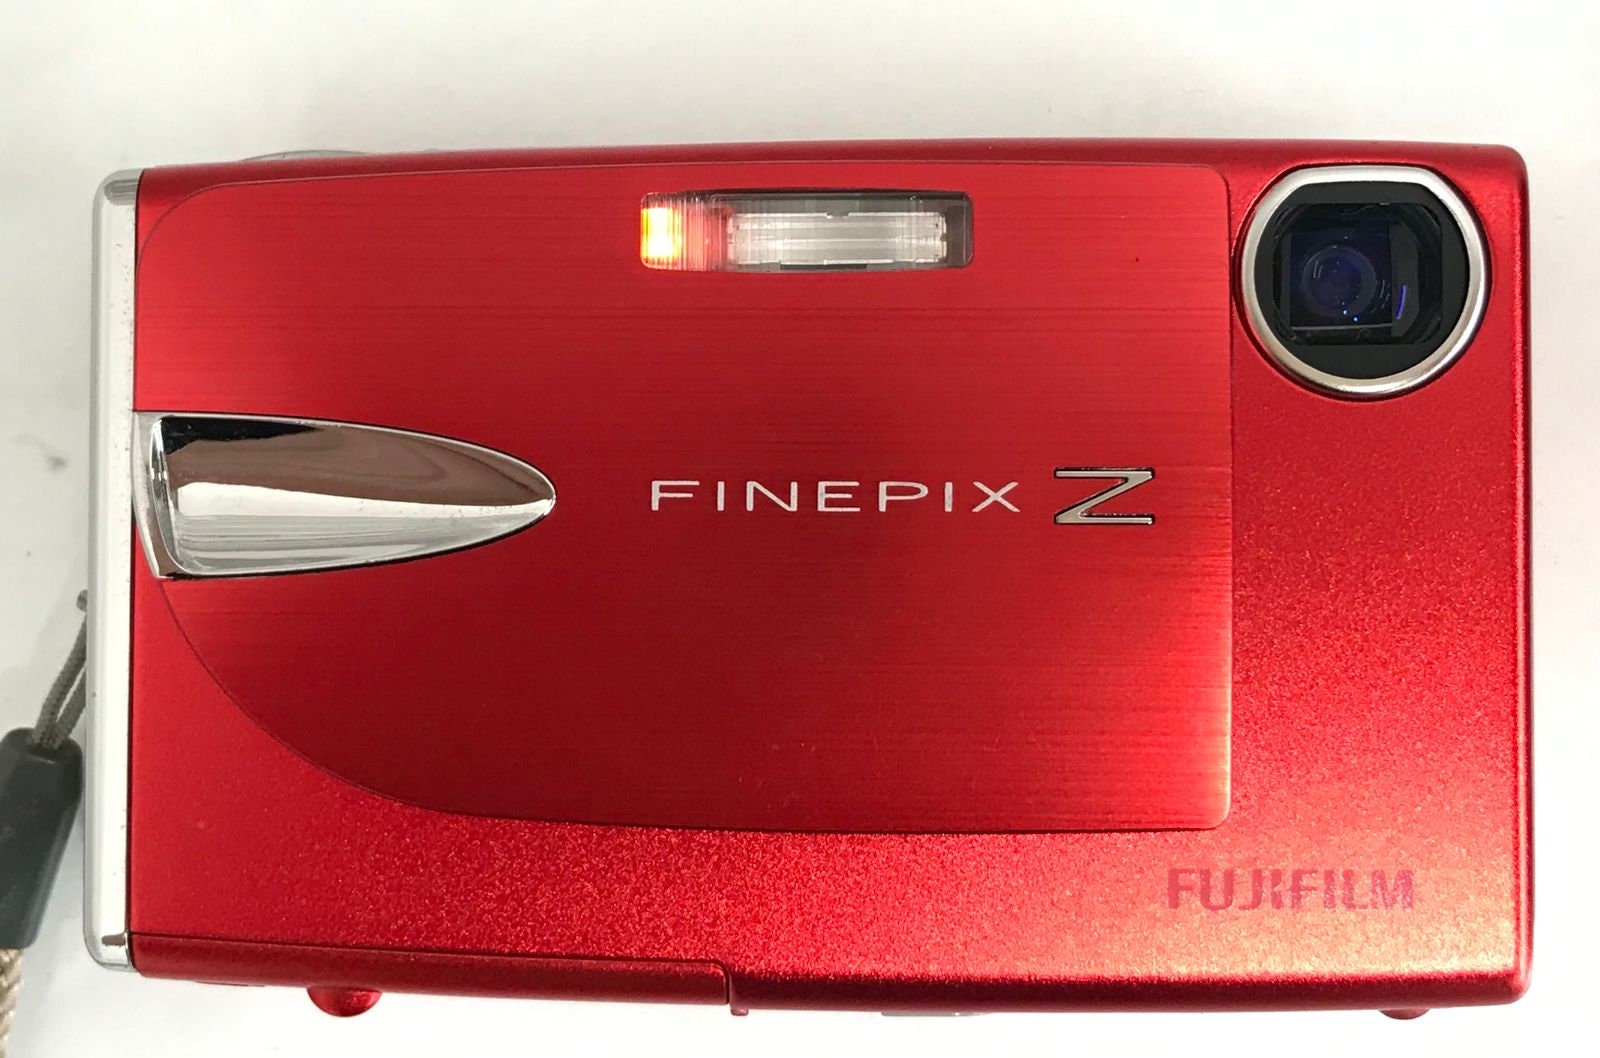 Hesje favoriete genoeg Fujifilm Finepix Z20fd 10.0MP Compact Digital Camera / Retro - Etsy